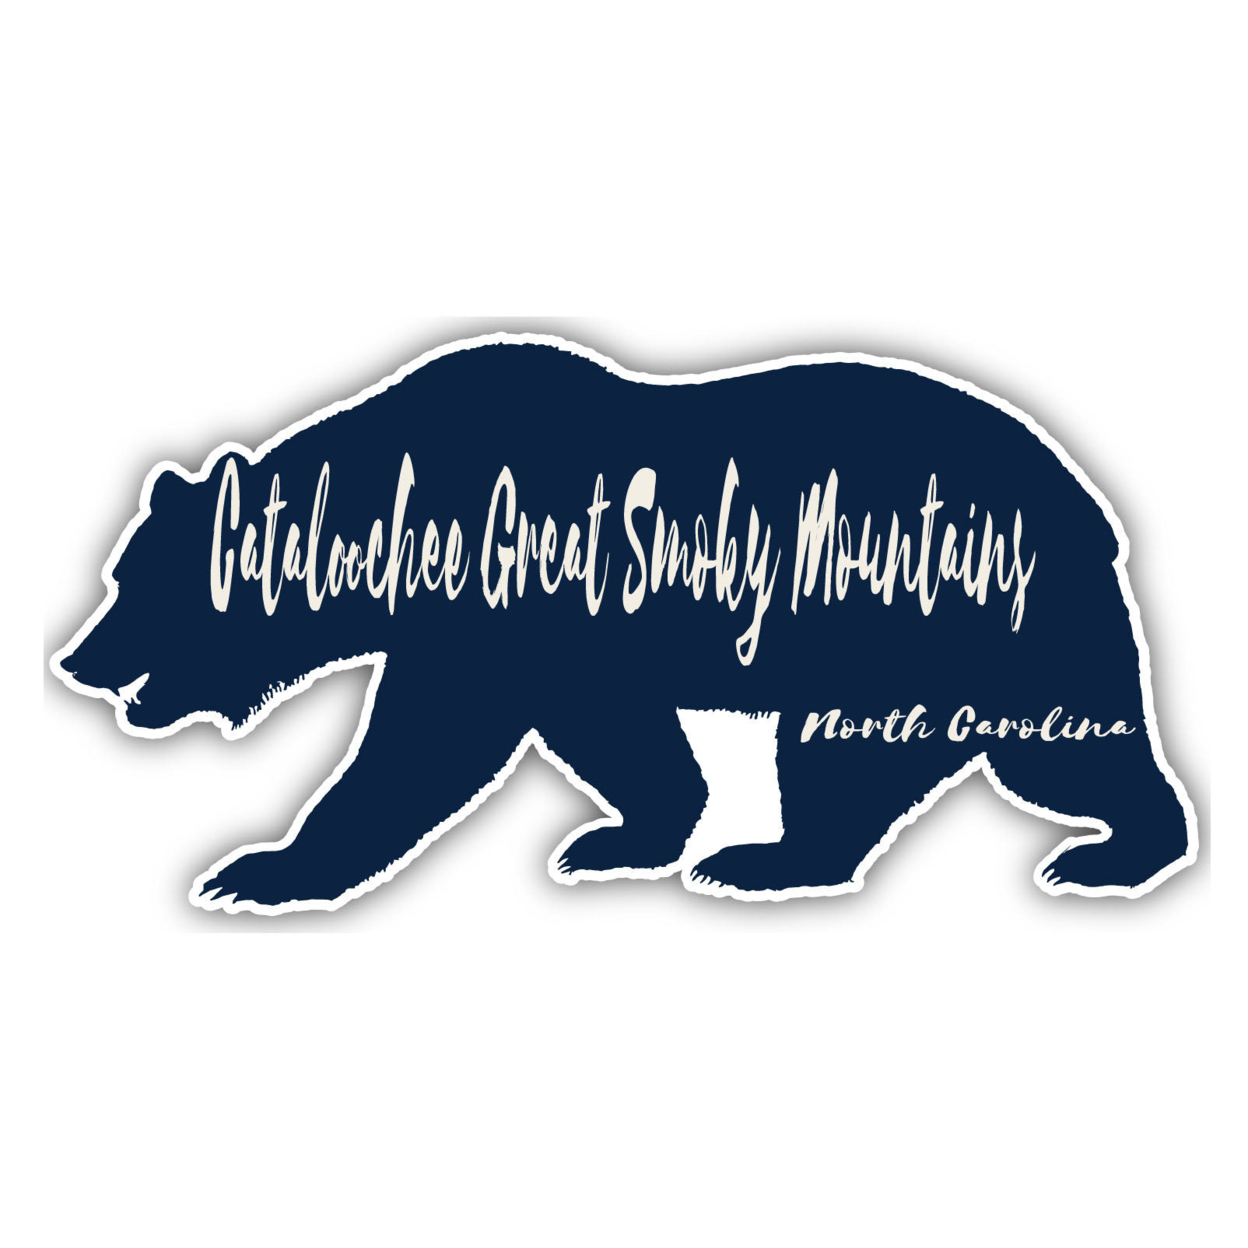 Cataloochee Great Smoky Mountains North Carolina Souvenir Decorative Stickers (Choose Theme And Size) - Single Unit, 12-Inch, Bear